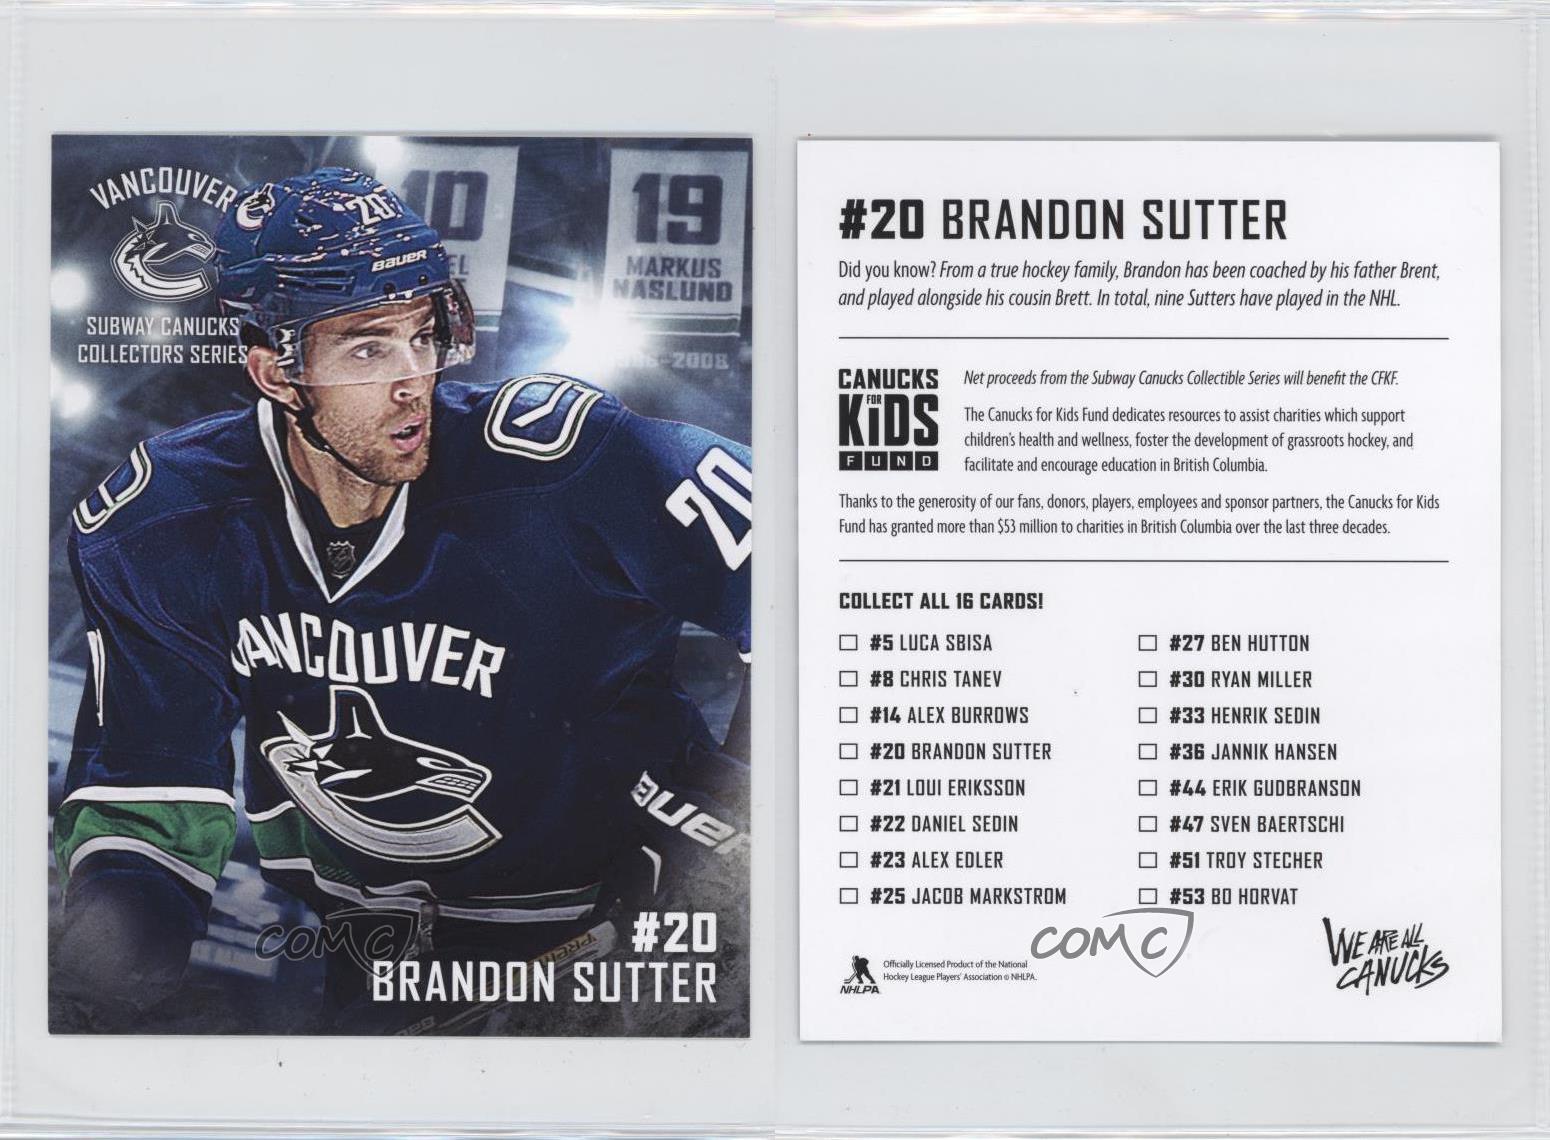 2017 Subway Vancouver Canucks Team Issue Brandon Sutter #20 | eBay